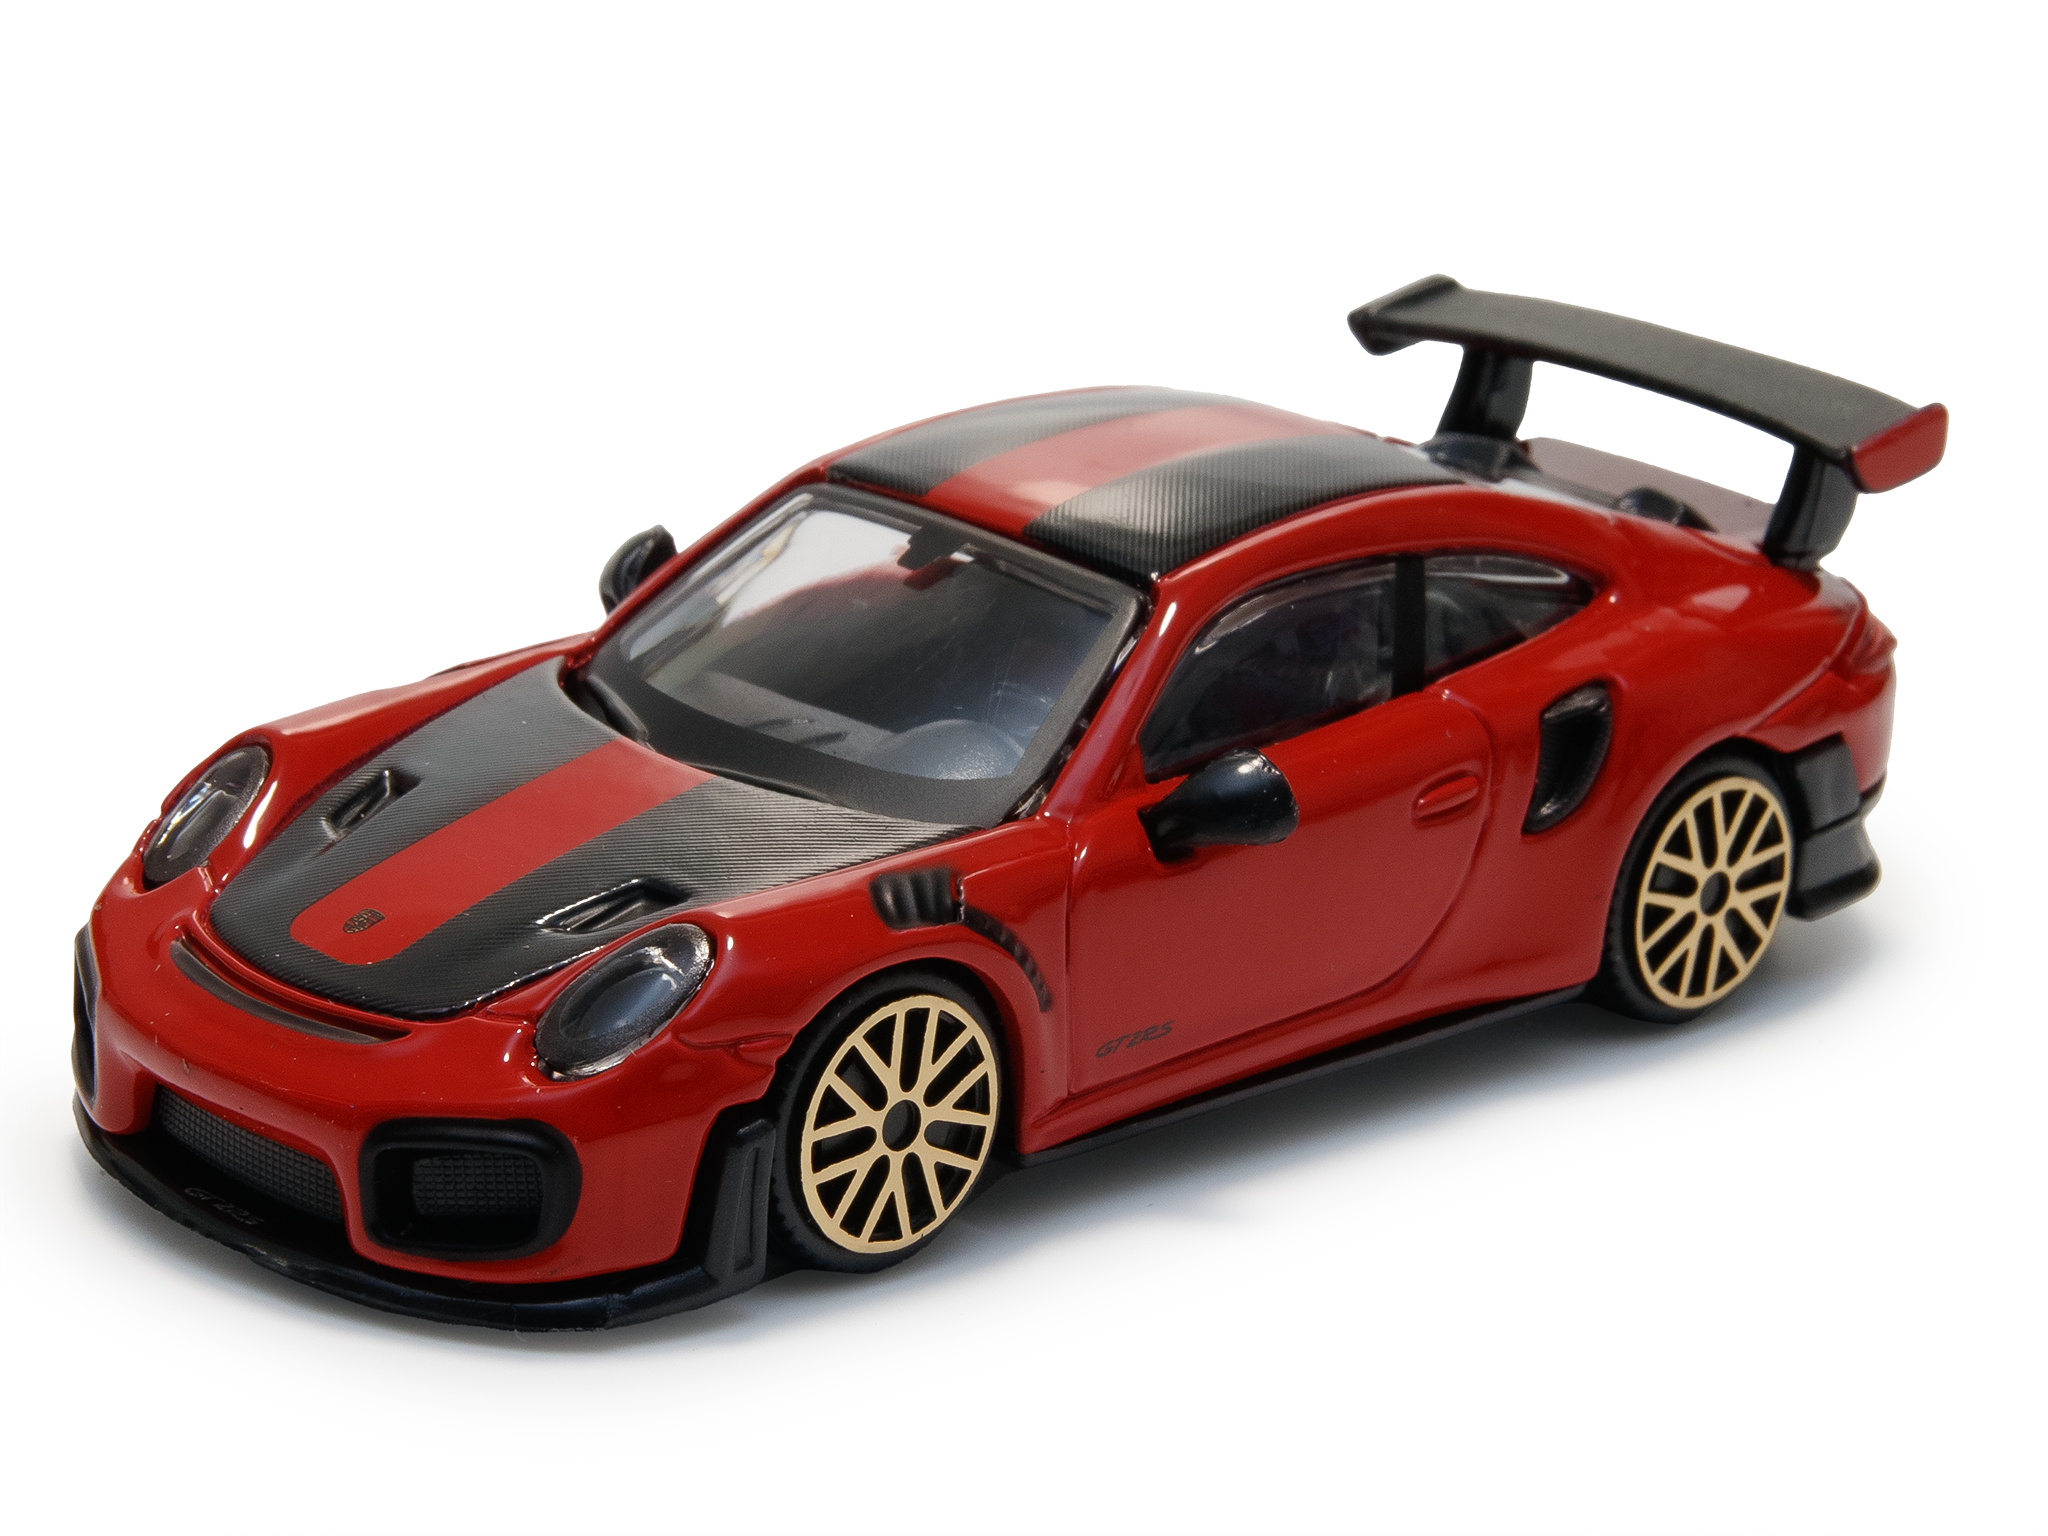 Porsche 911 GT2 RS red - 1:43 Scale Diecast Toy Car